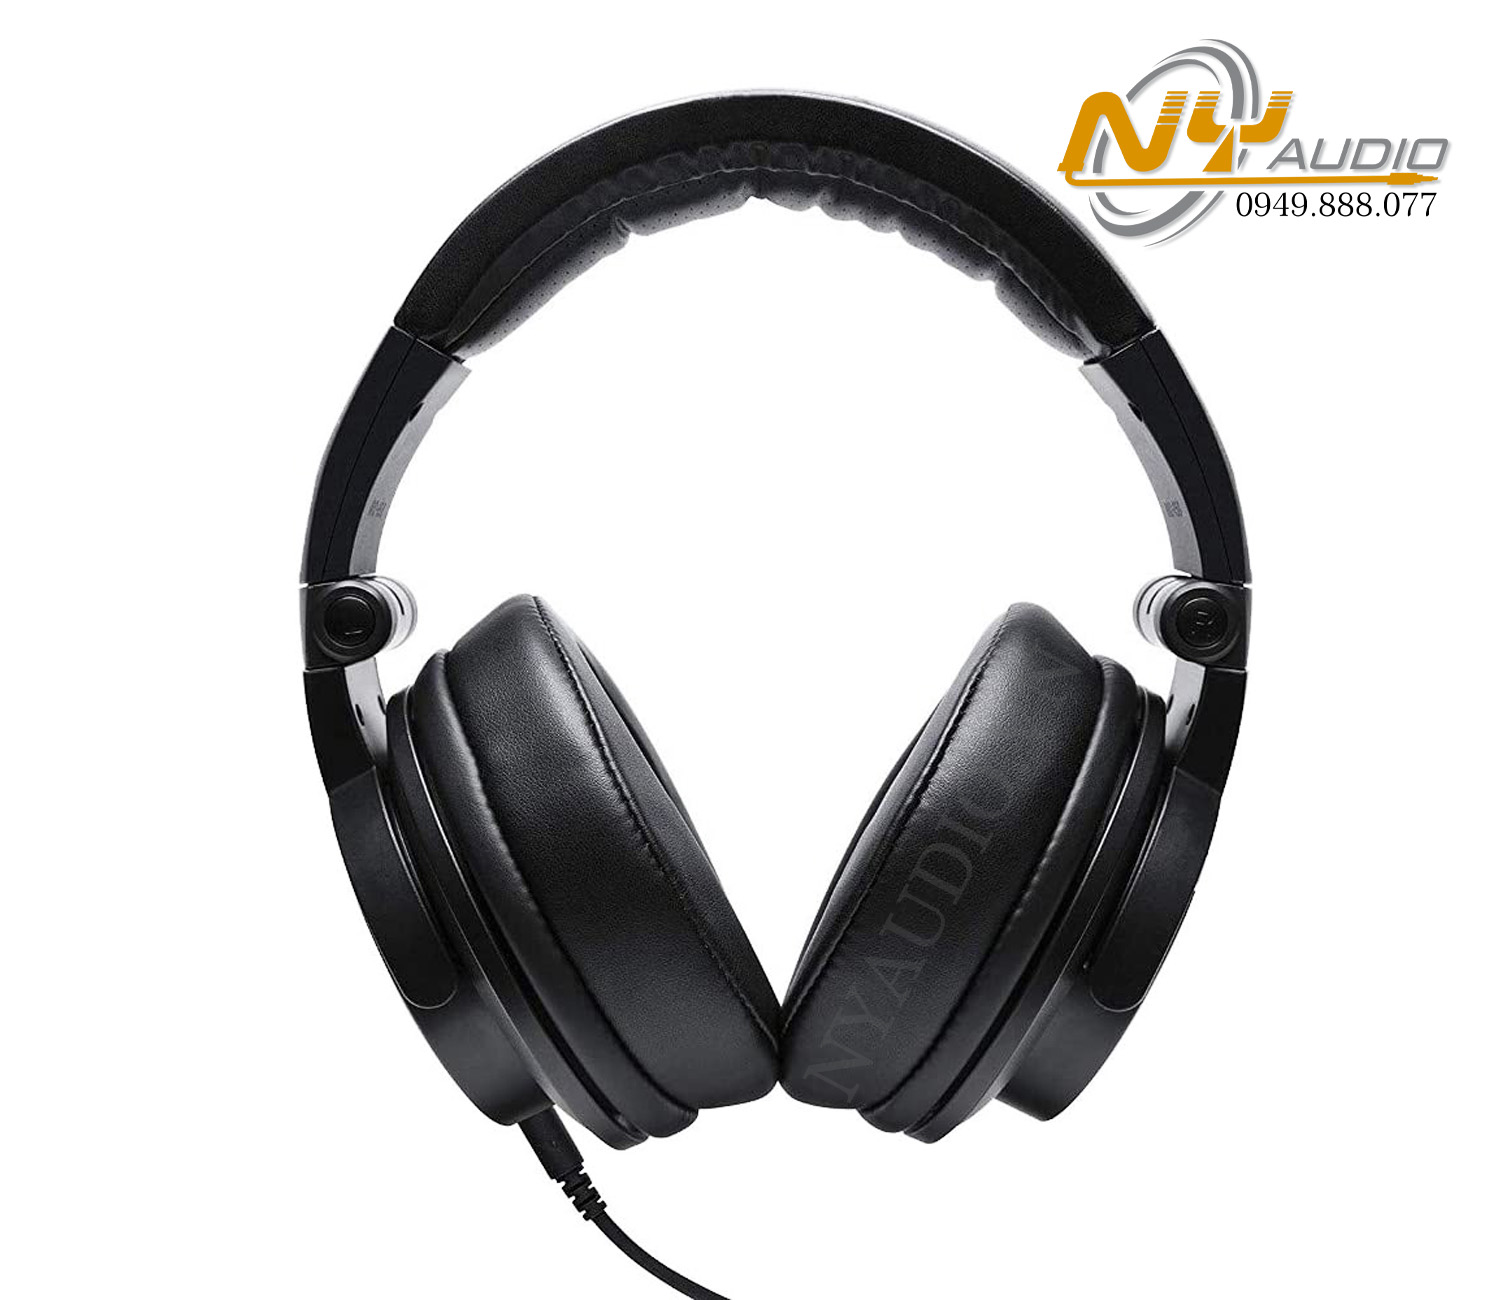 Mackie MC150 | Mixing Studio headphone